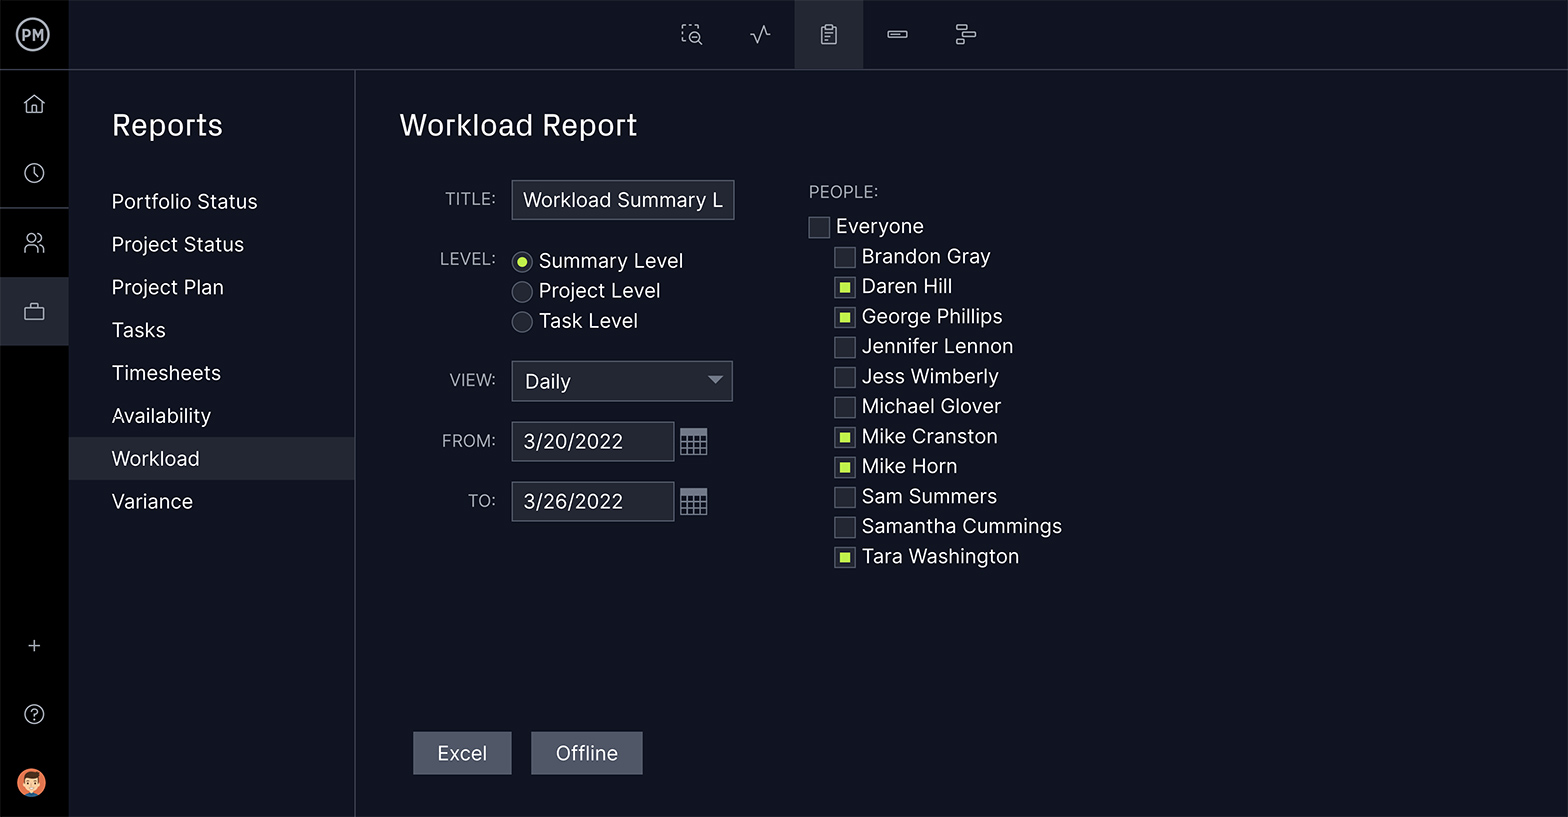 ProjectManager's workload management report